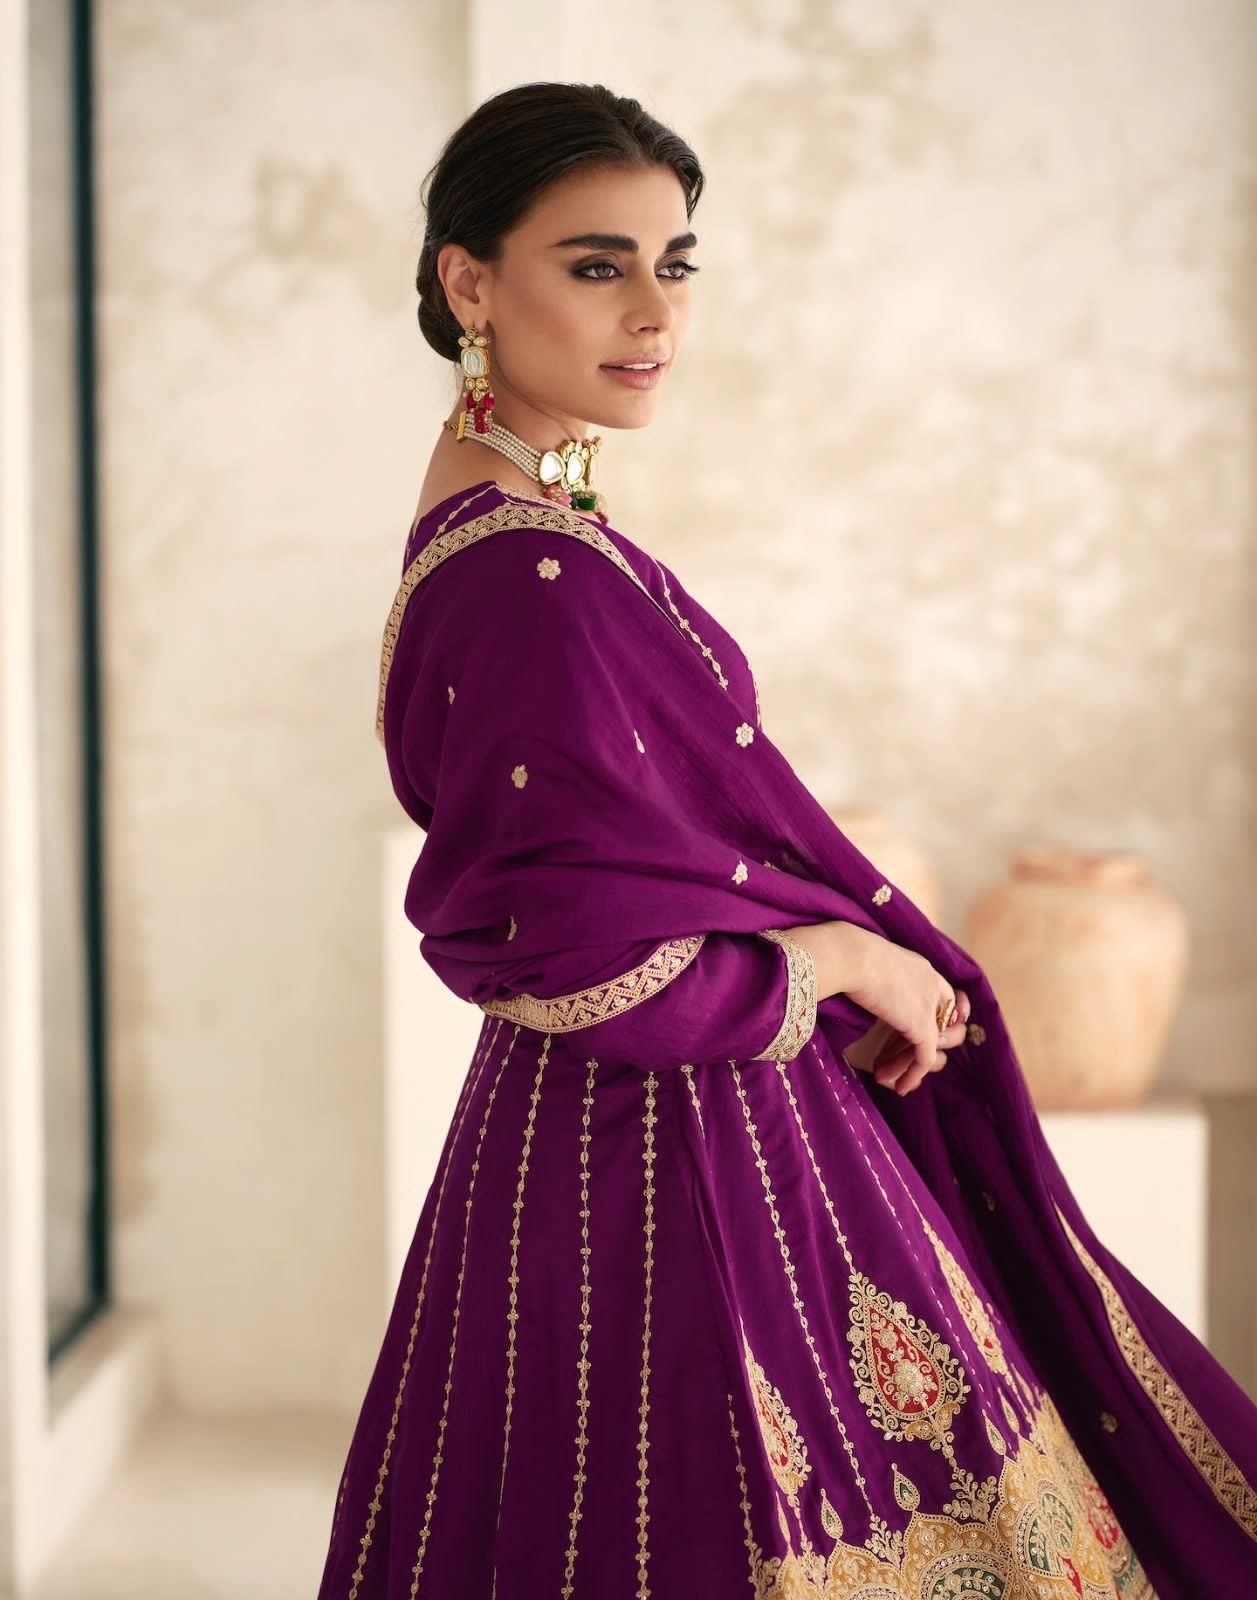 Romani Aashirwad Creation Silk Readymade Suits